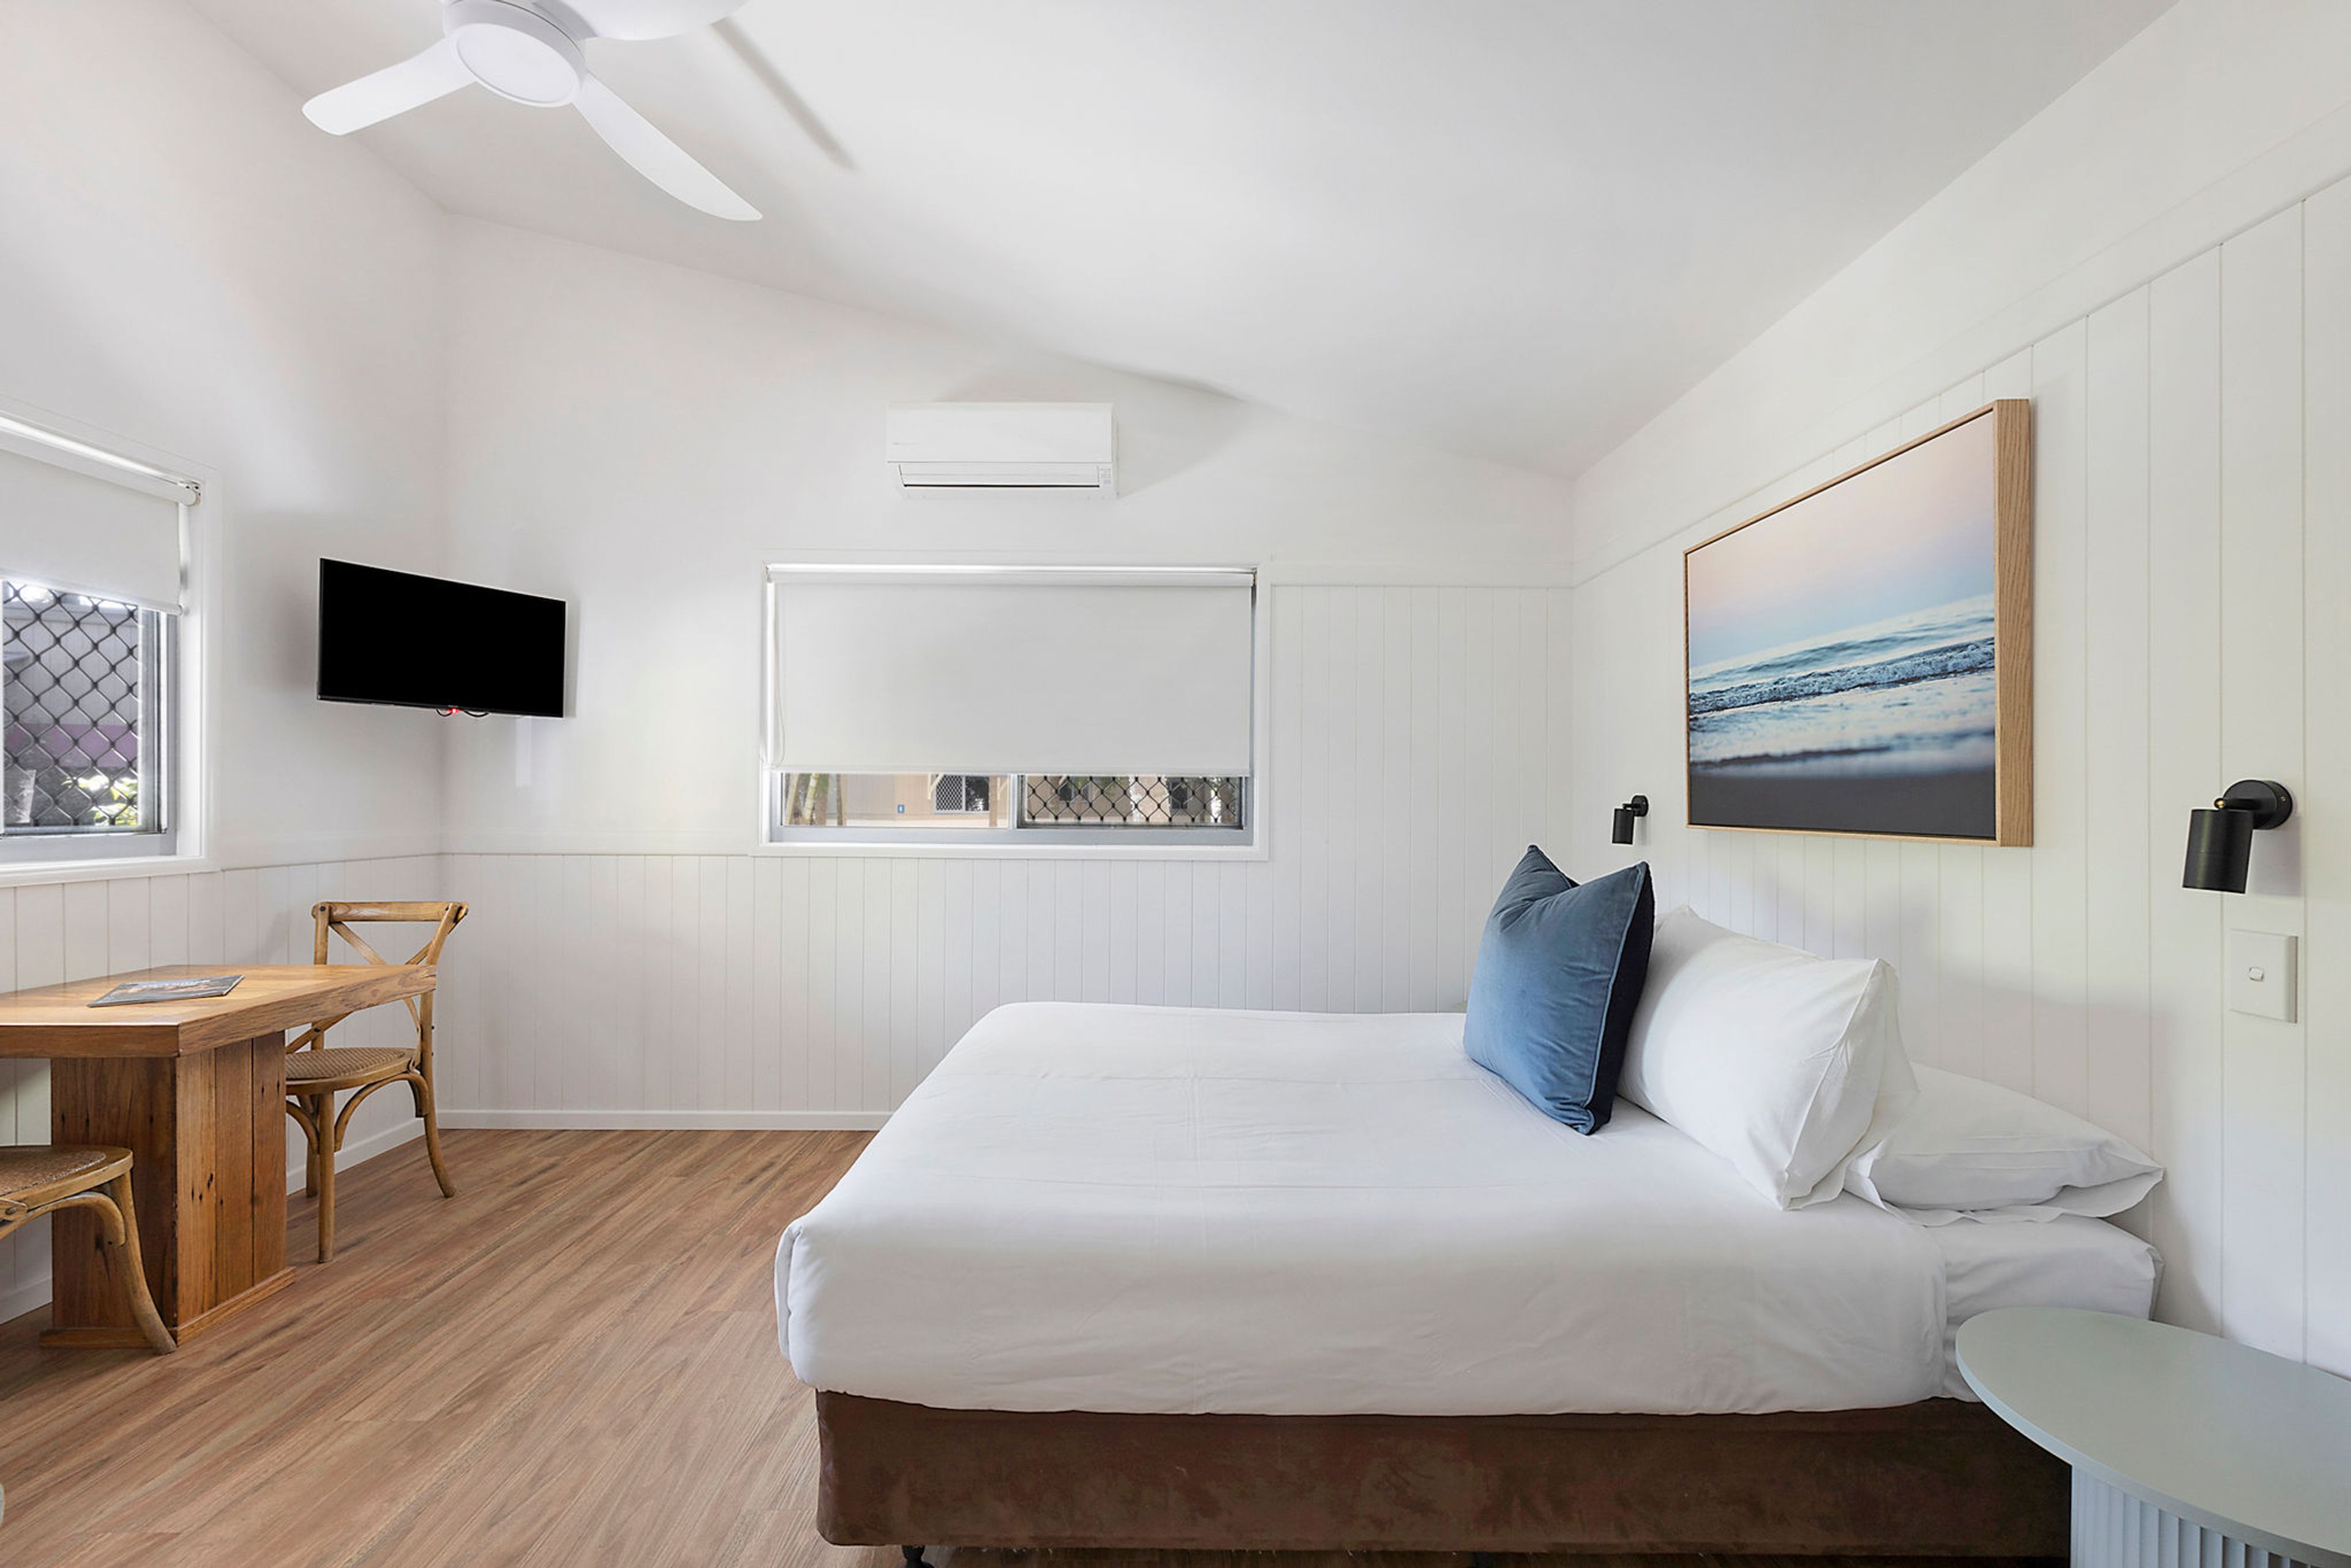 Byron Bay Standard Cabin sleeps 2 - bed